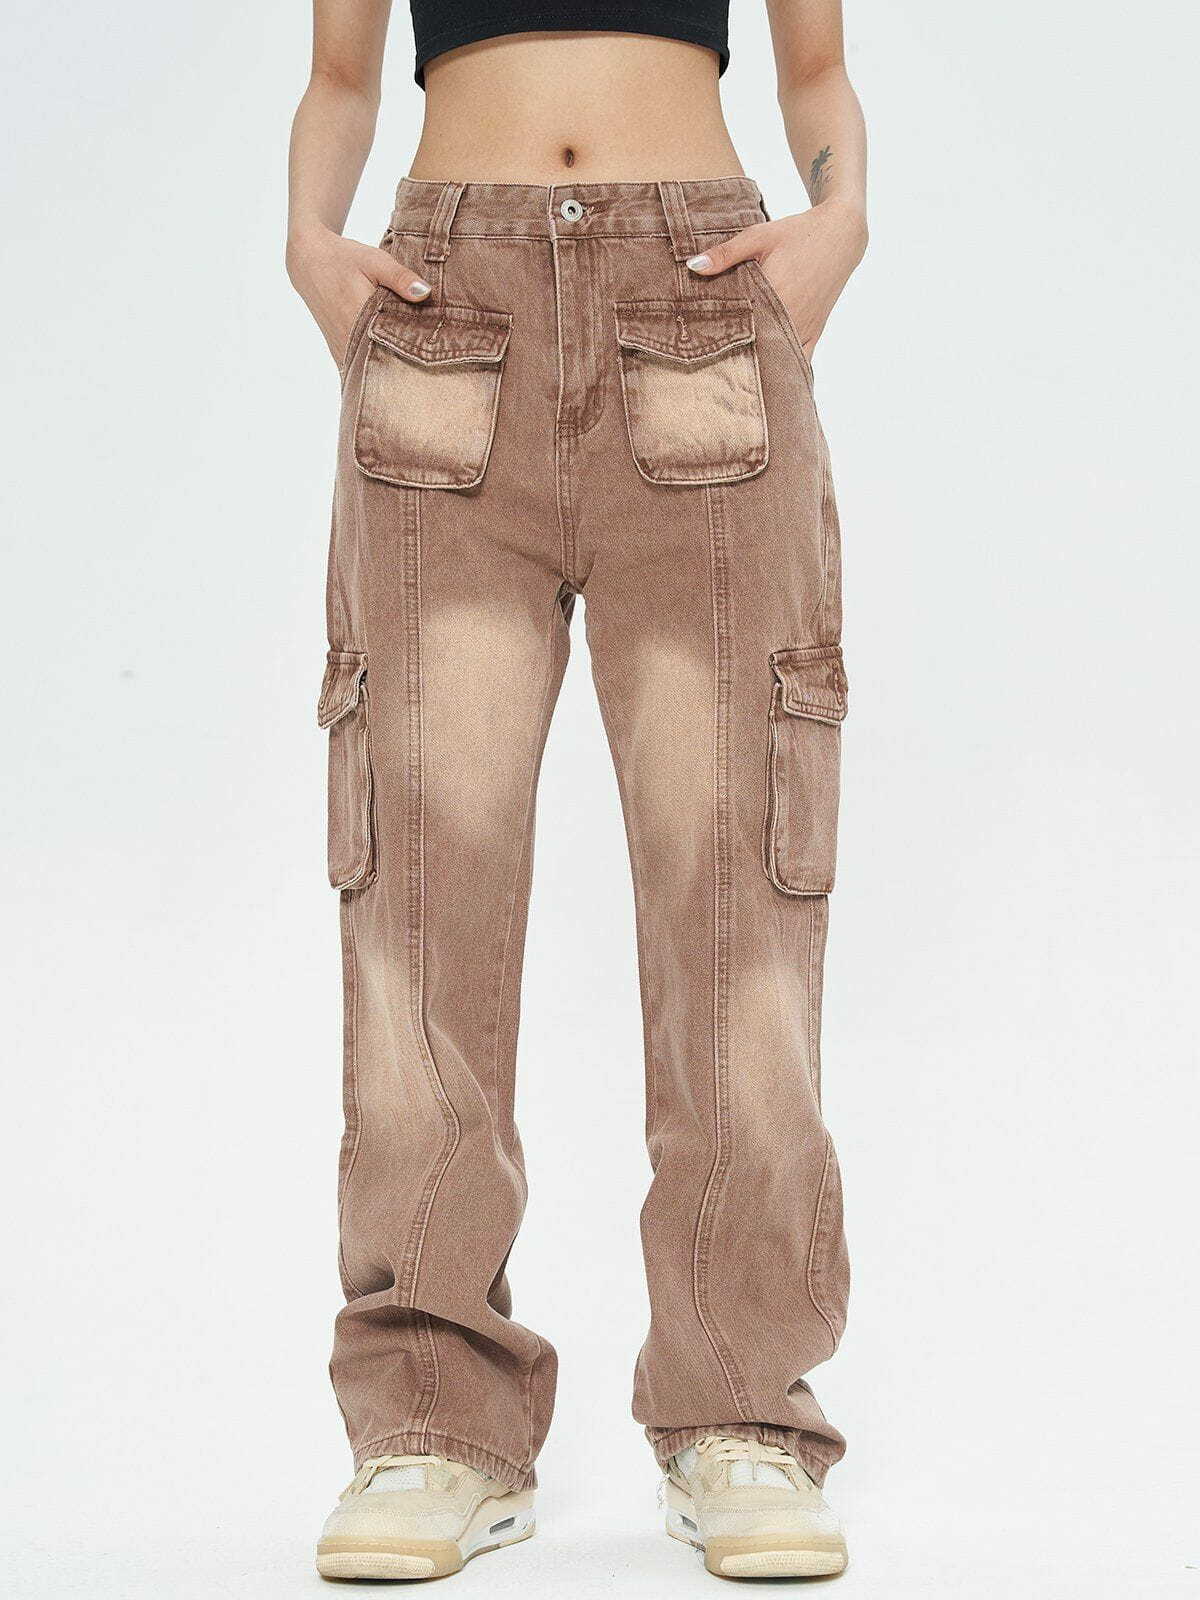 multipocket vintage jeans edgy & retro streetwear 6319